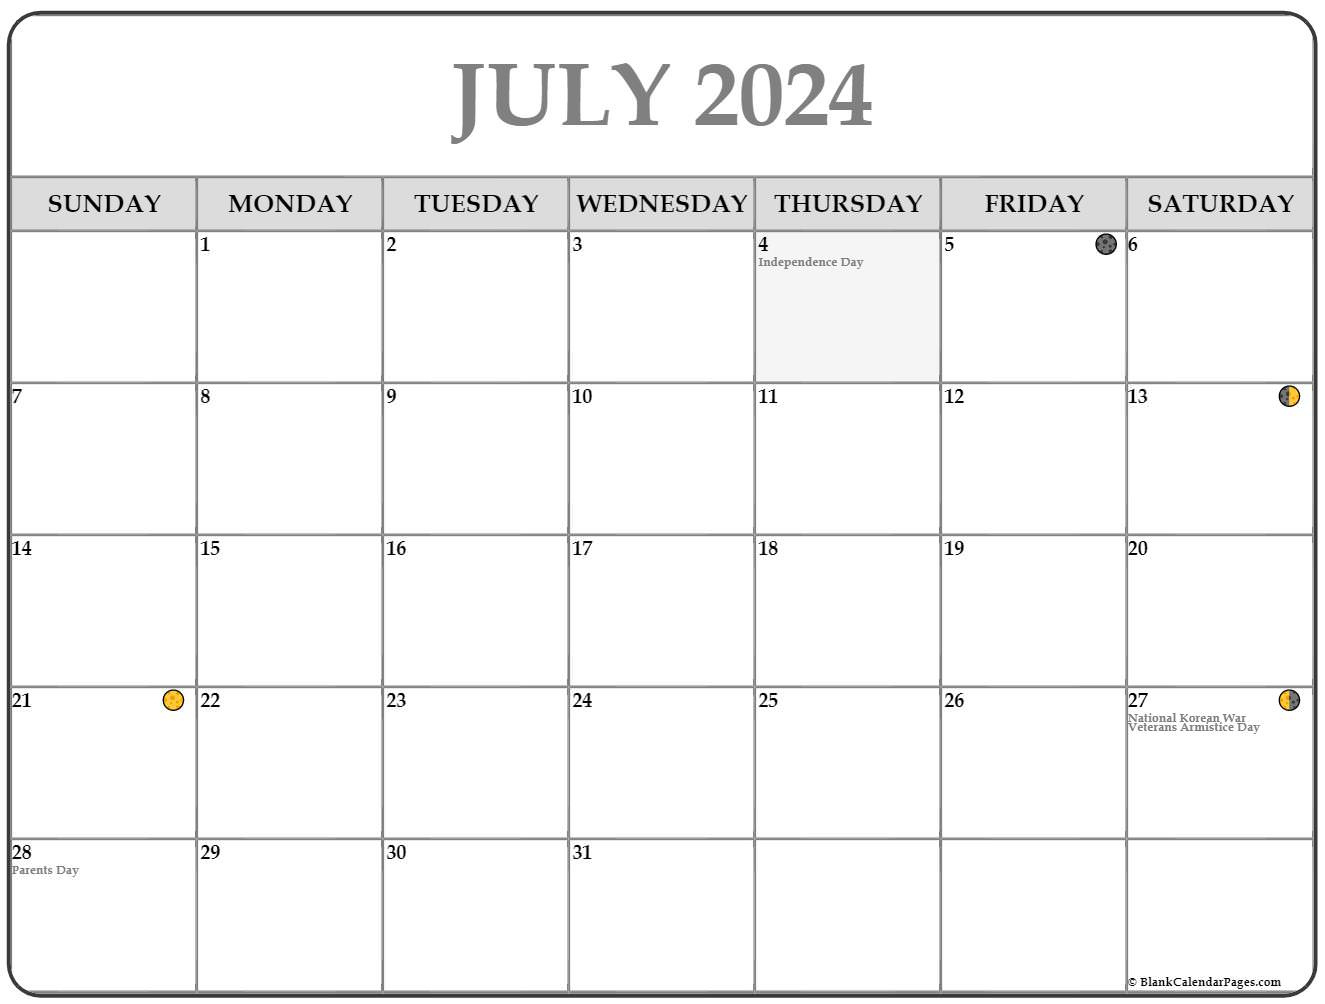 July 2024 Lunar Calendar | Moon Phase Calendar with regard to Calendar Moon July 2024